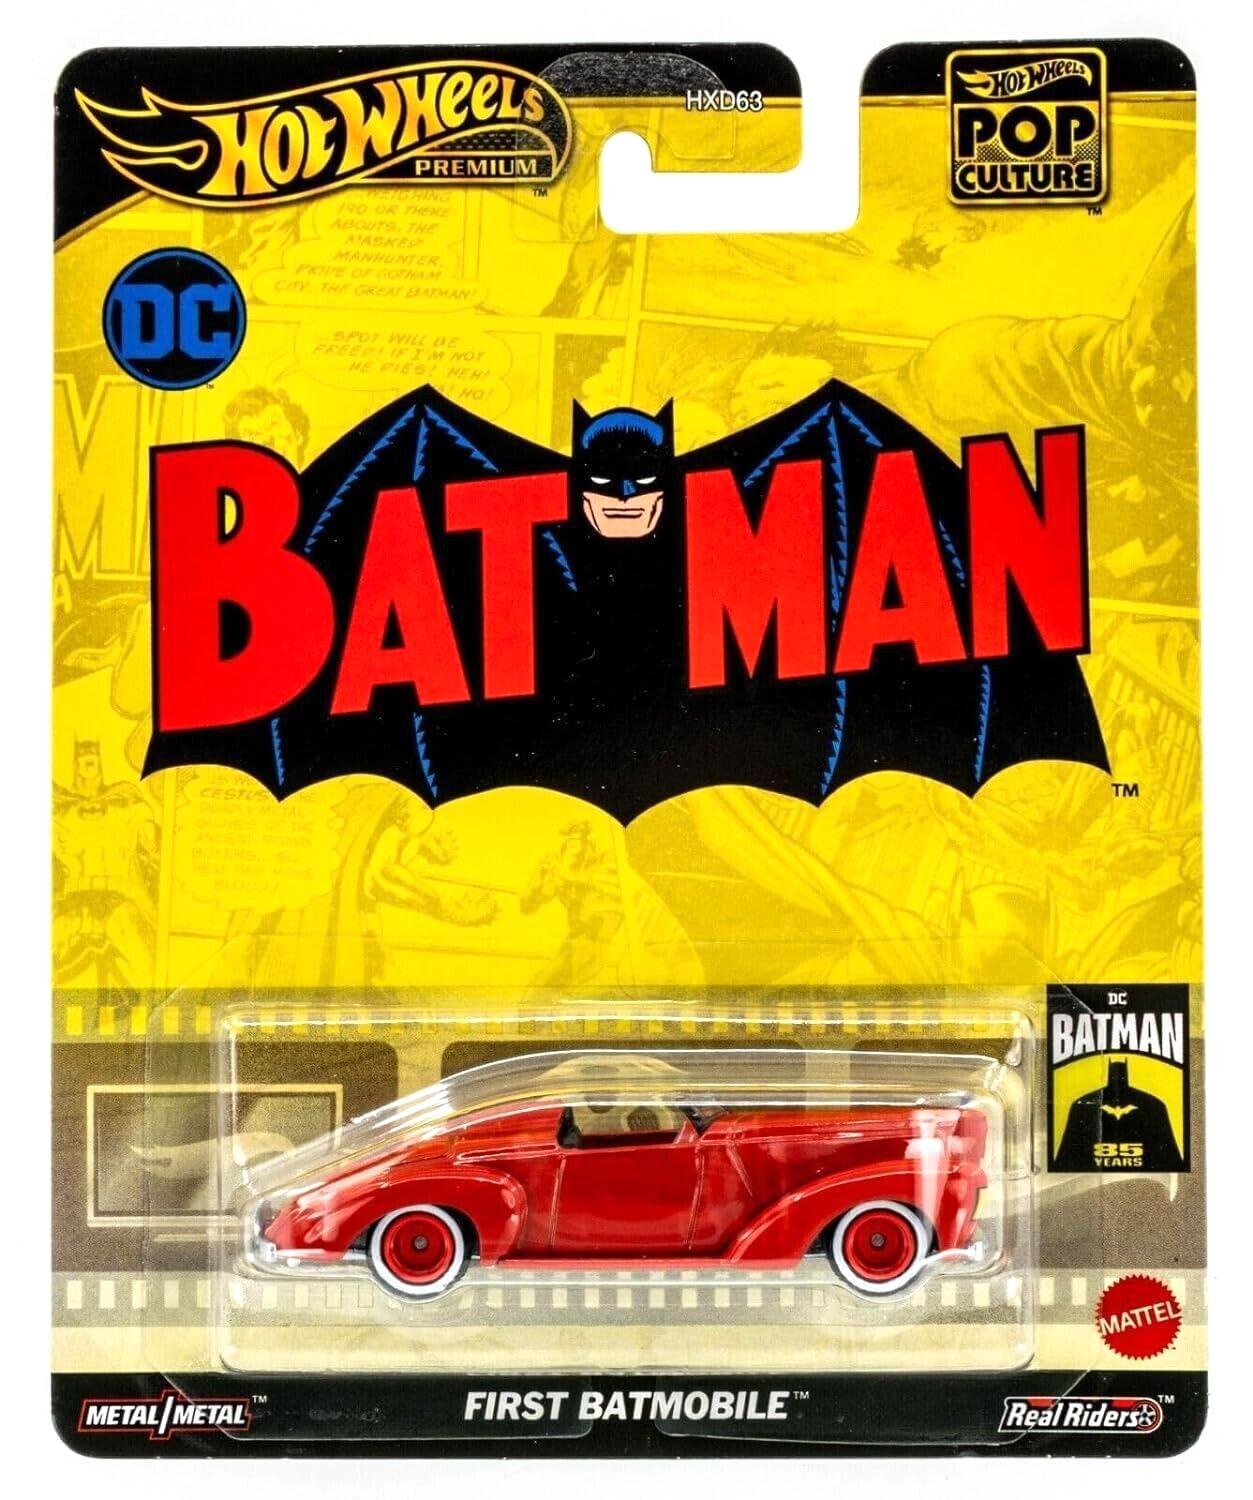 1:64 Hot Wheels Premium First Batmobile Batman red Pop Culture Real Riders HVJ40